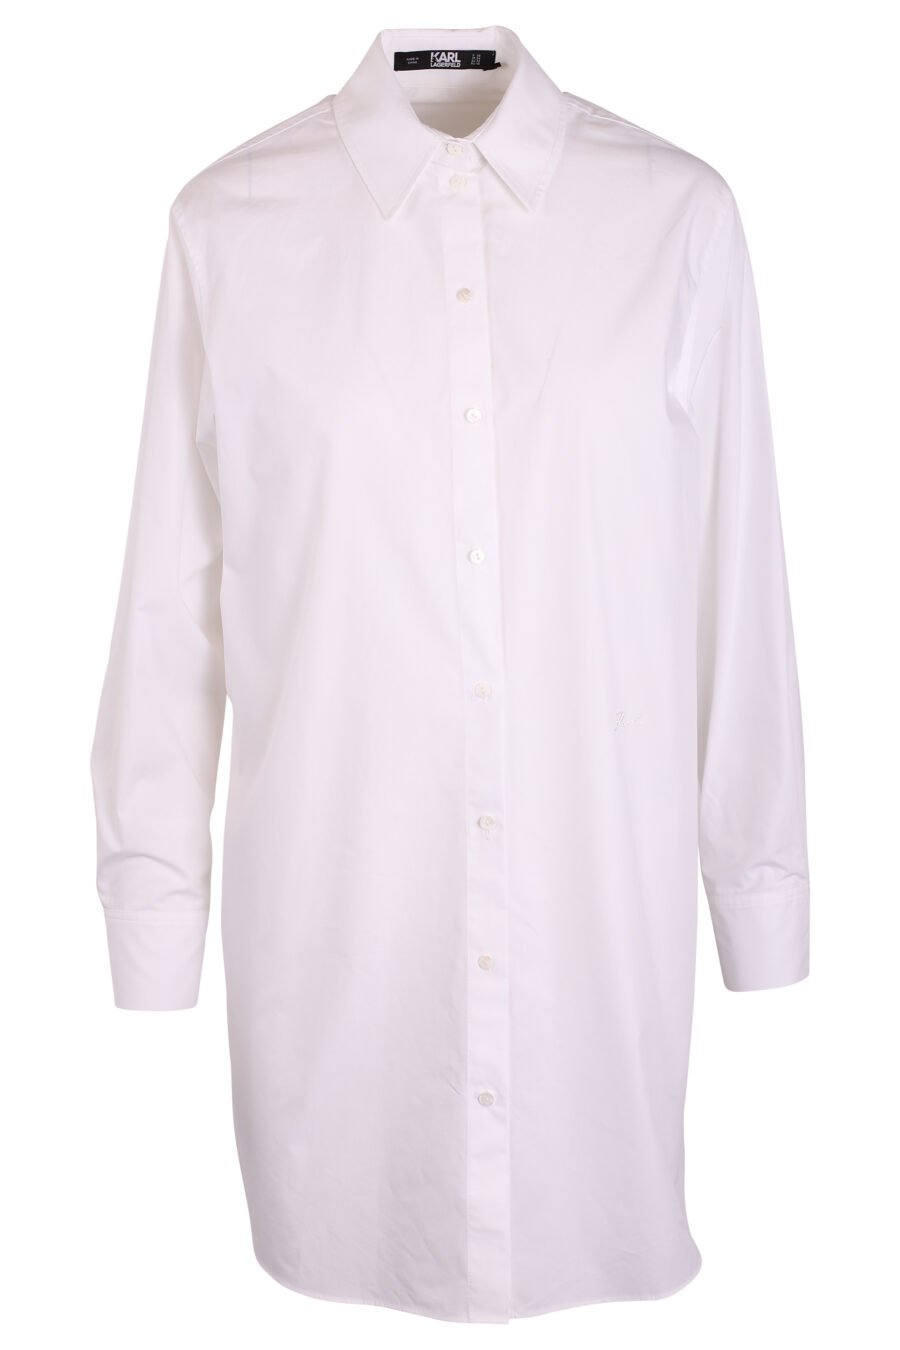 Longue chemise blanche avec logo strass - IMG 3422